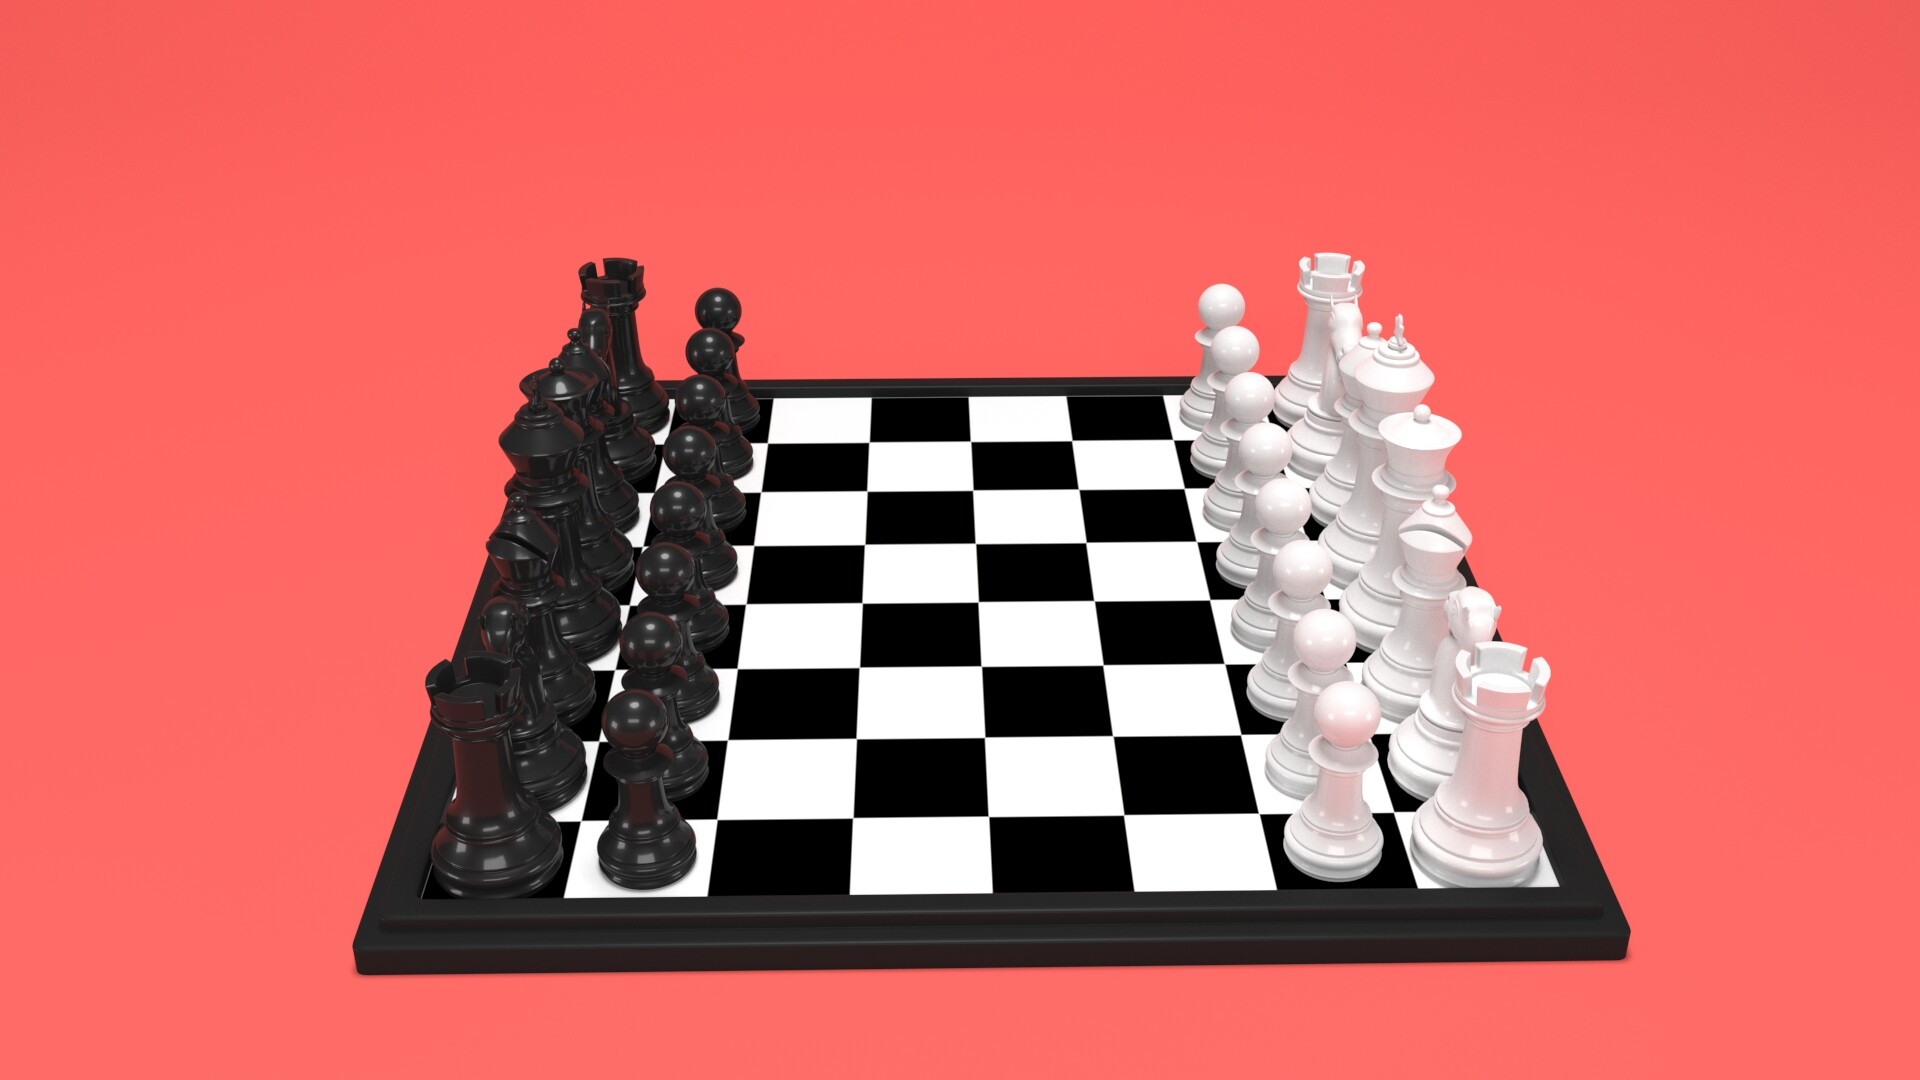 File:Chess Single Image Stereogram by 3Dimka.jpg - Wikipedia